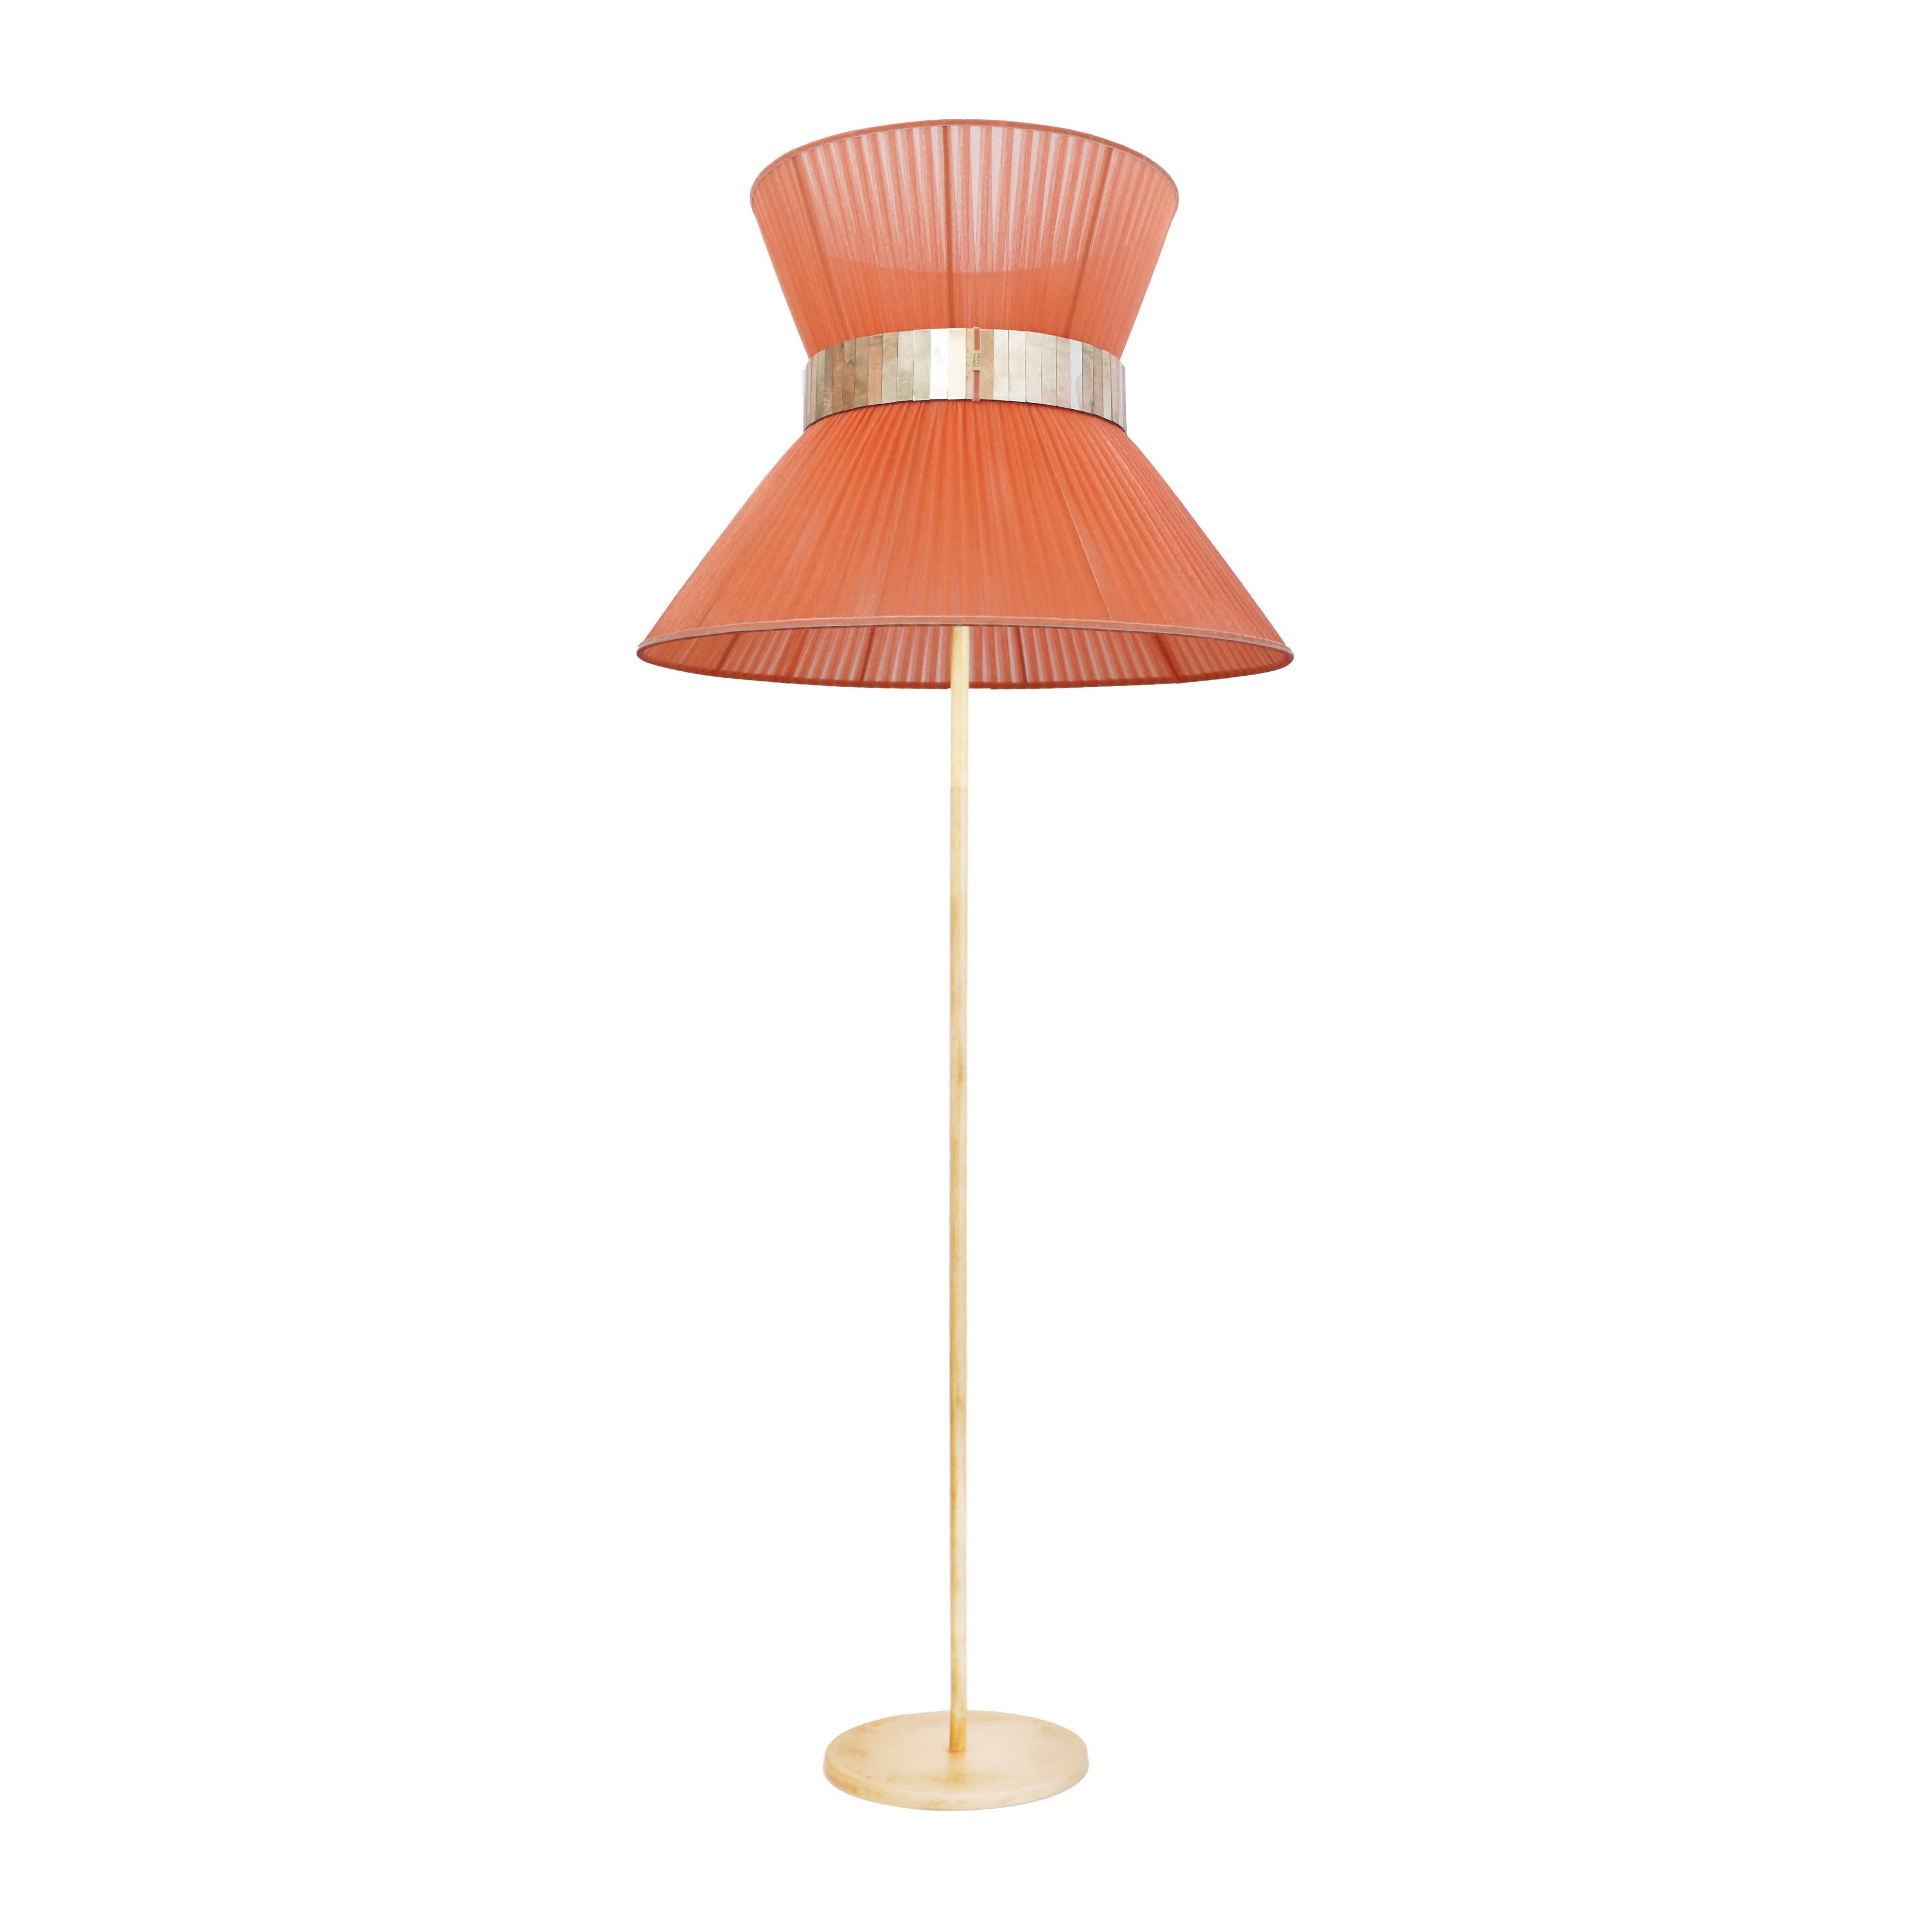 TIFFANY la lampe emblématique !

Tiffany, lampe intemporelle, inspirée du film international 